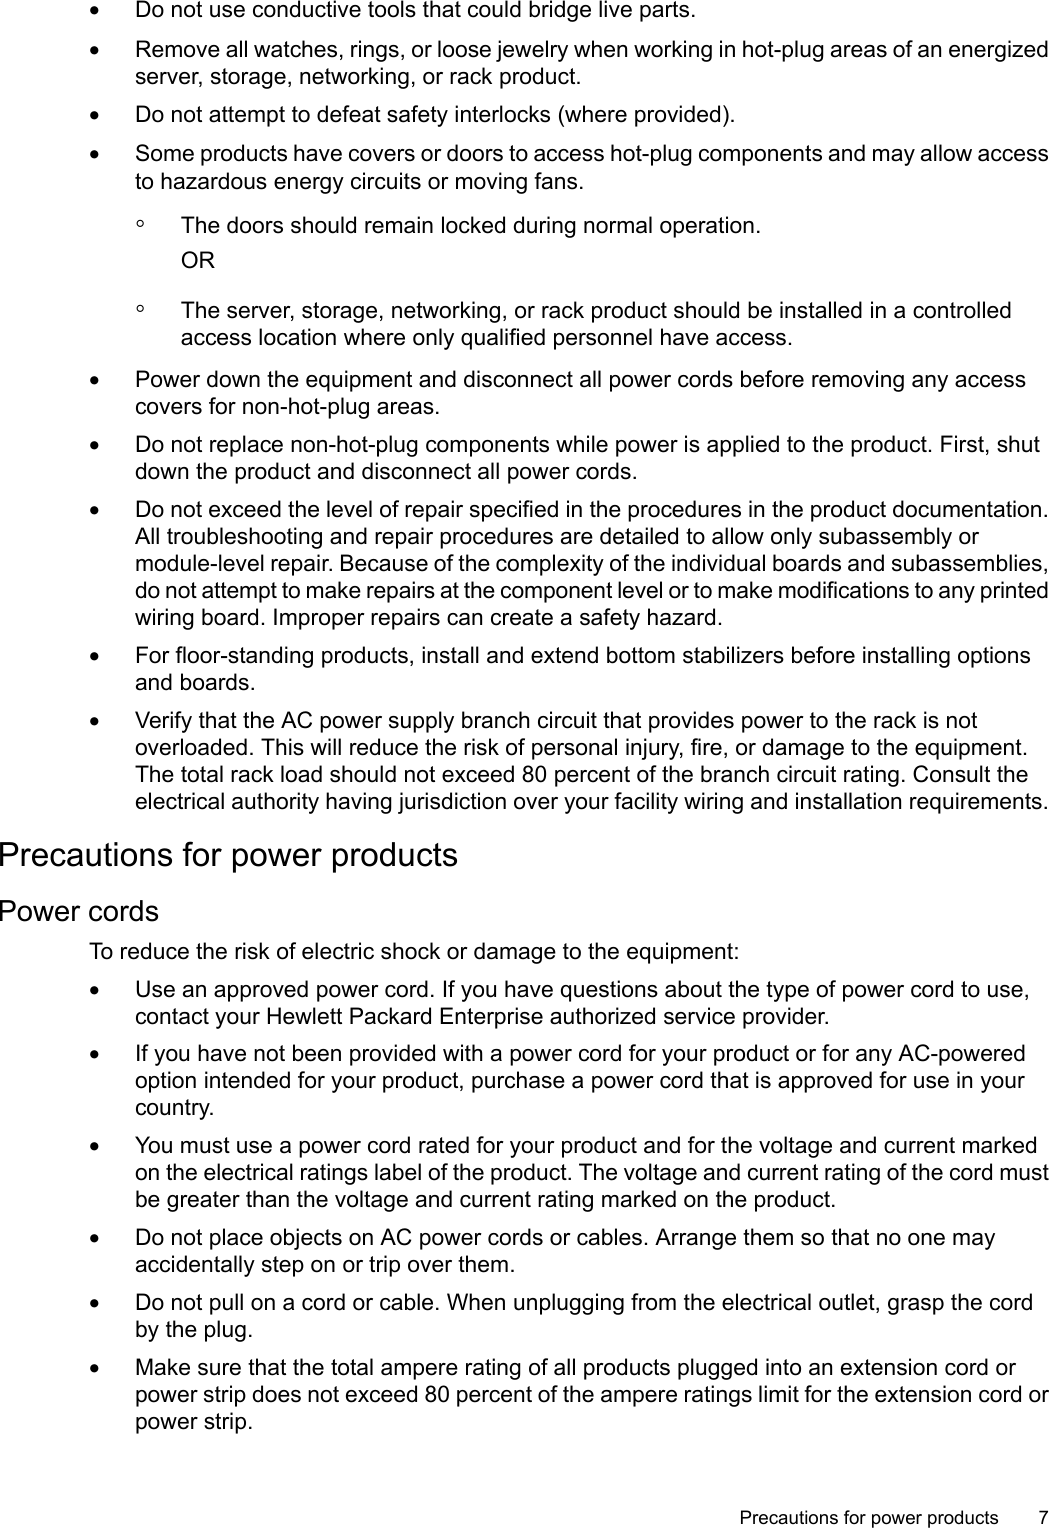 Page 7 of Hewlett Packard Enterprise APINR203P203 802.11 a/b/g/n/ac Wireless Access Point User Manual  3 of 3 